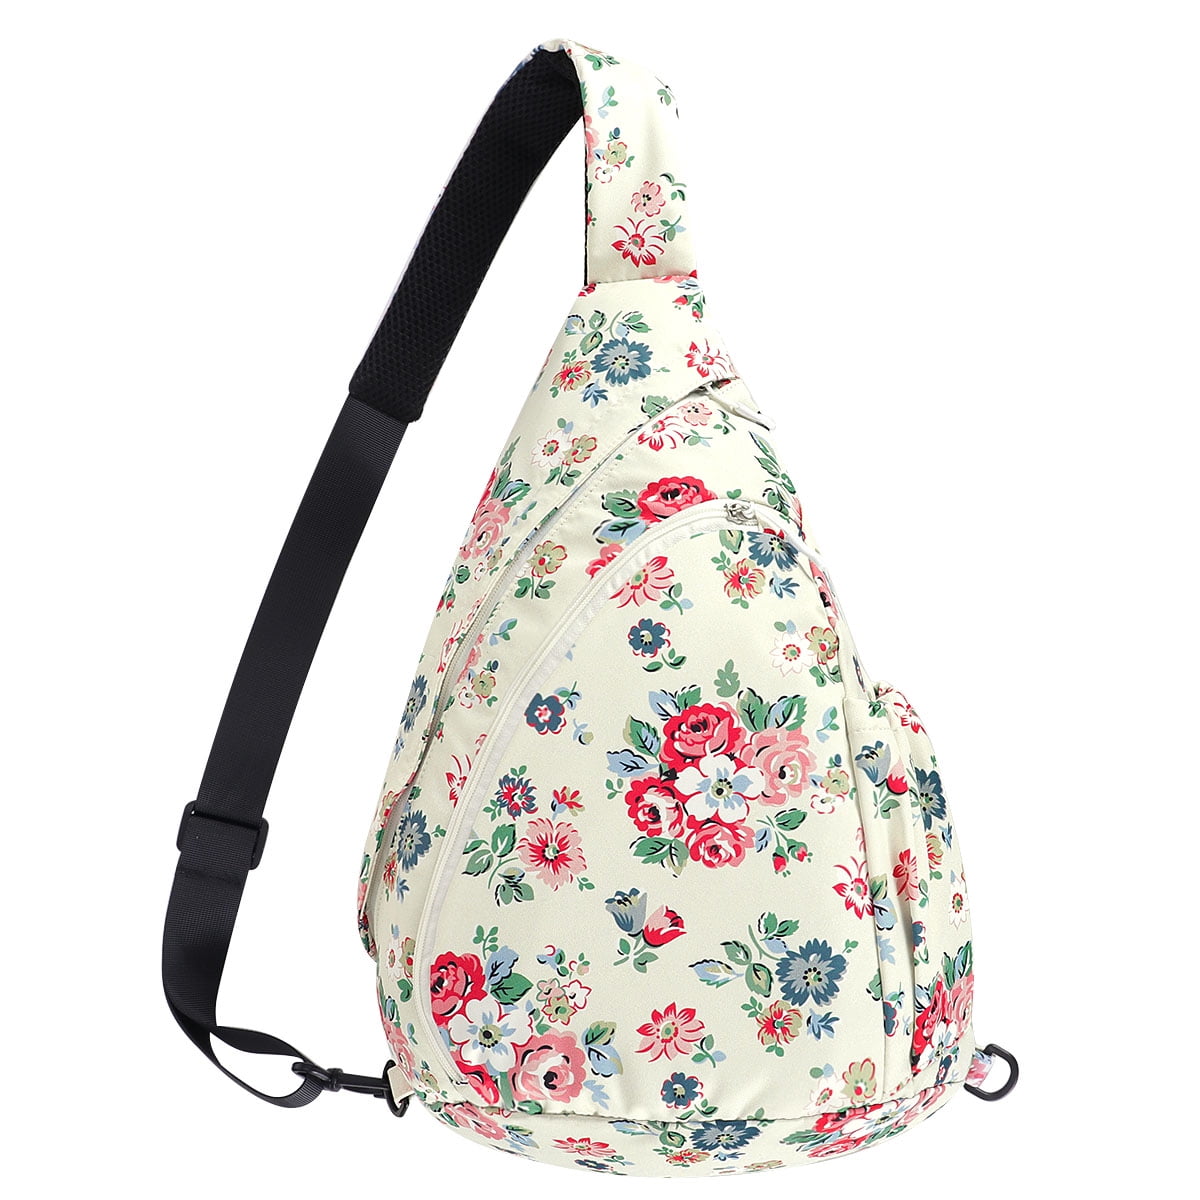 Cosmic Flower Field Messenger Bag Crossbody Bag Large Durable Shoulder School Or Business Bag Oxford Fabric For Mens Womens